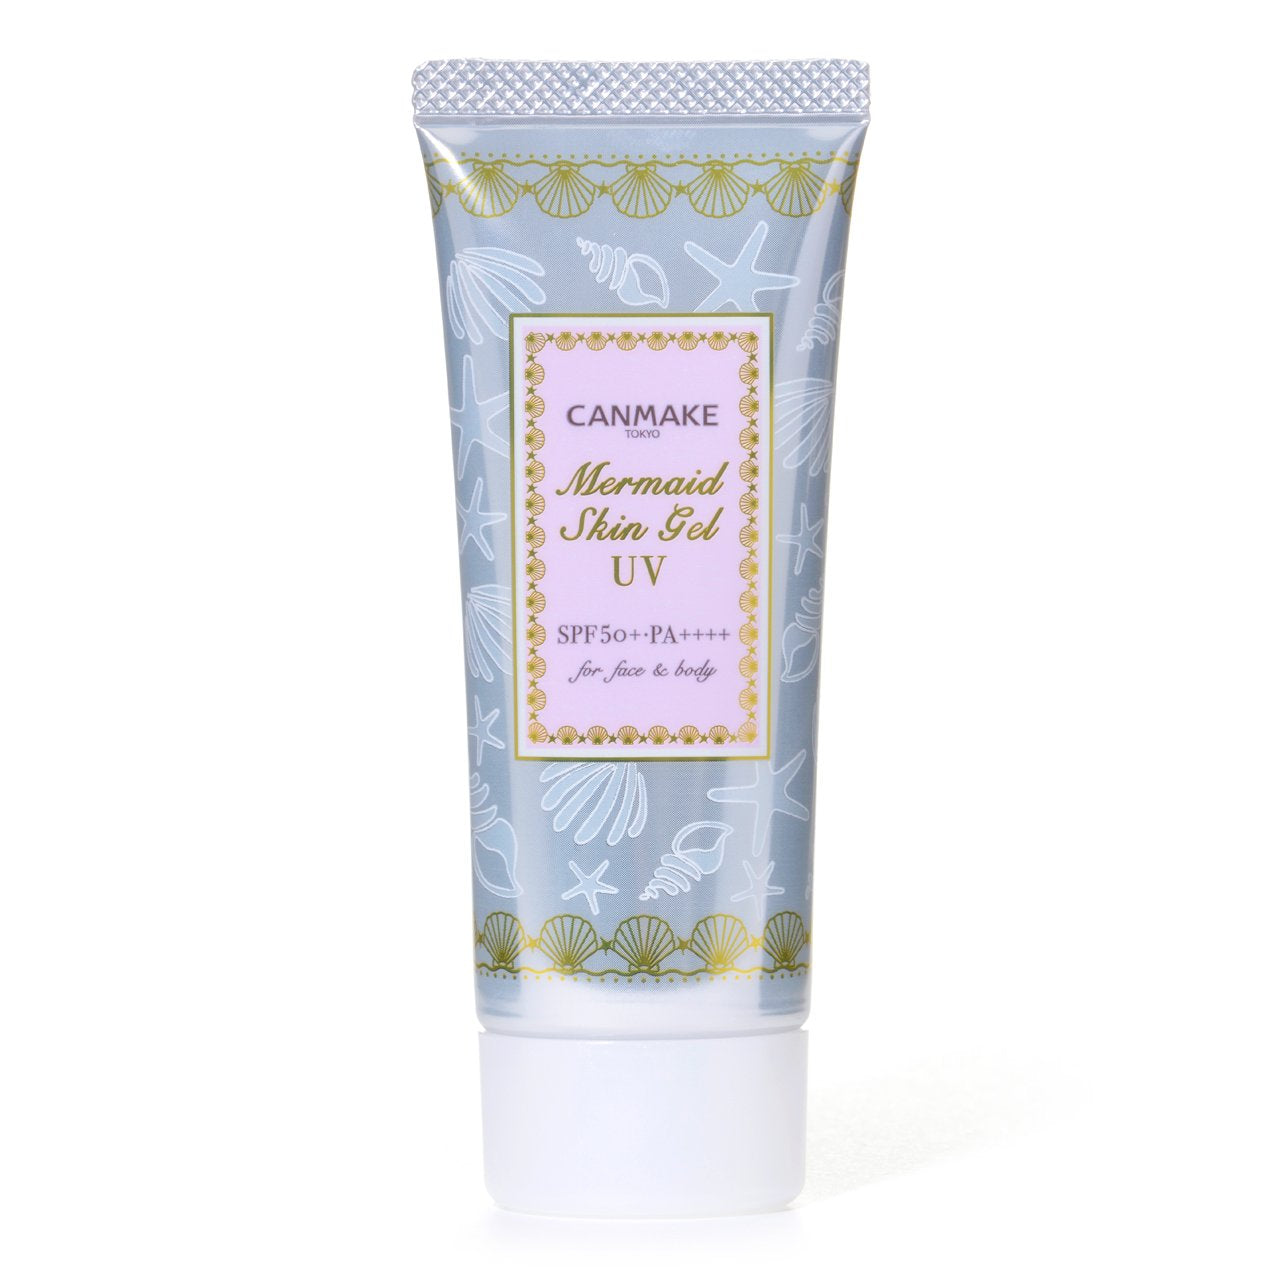 Canmake - Mermaid Skin Gel UV SPF 50+ PA++++